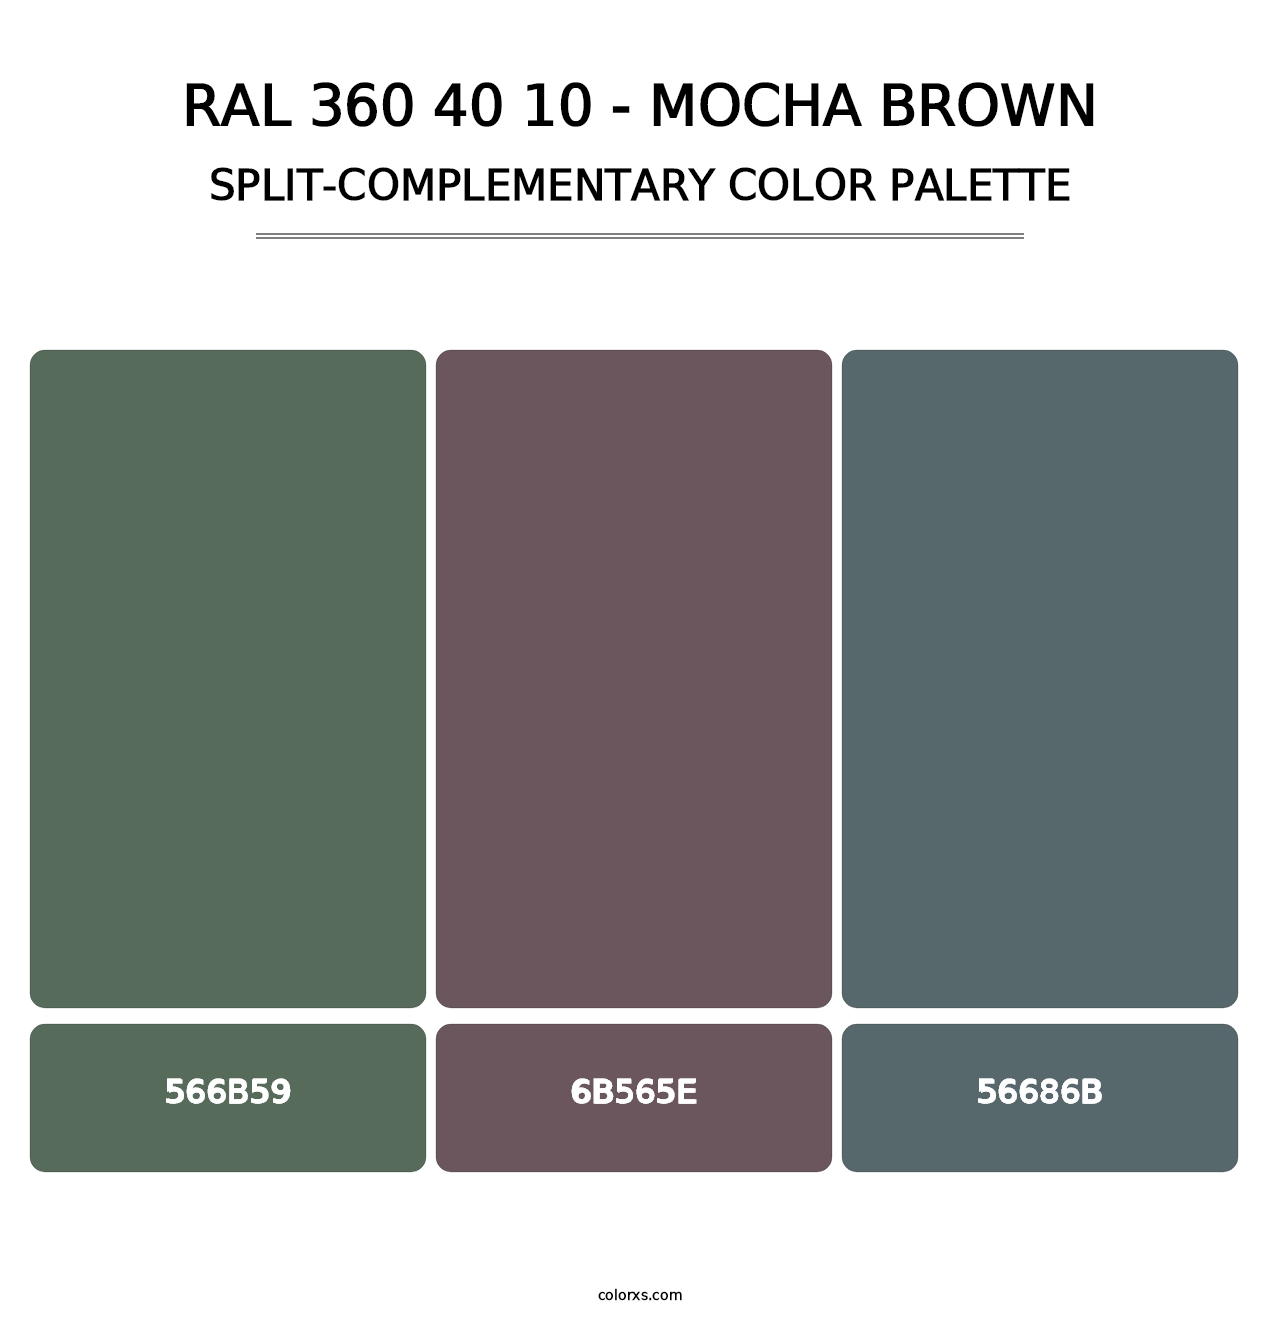 RAL 360 40 10 - Mocha Brown - Split-Complementary Color Palette